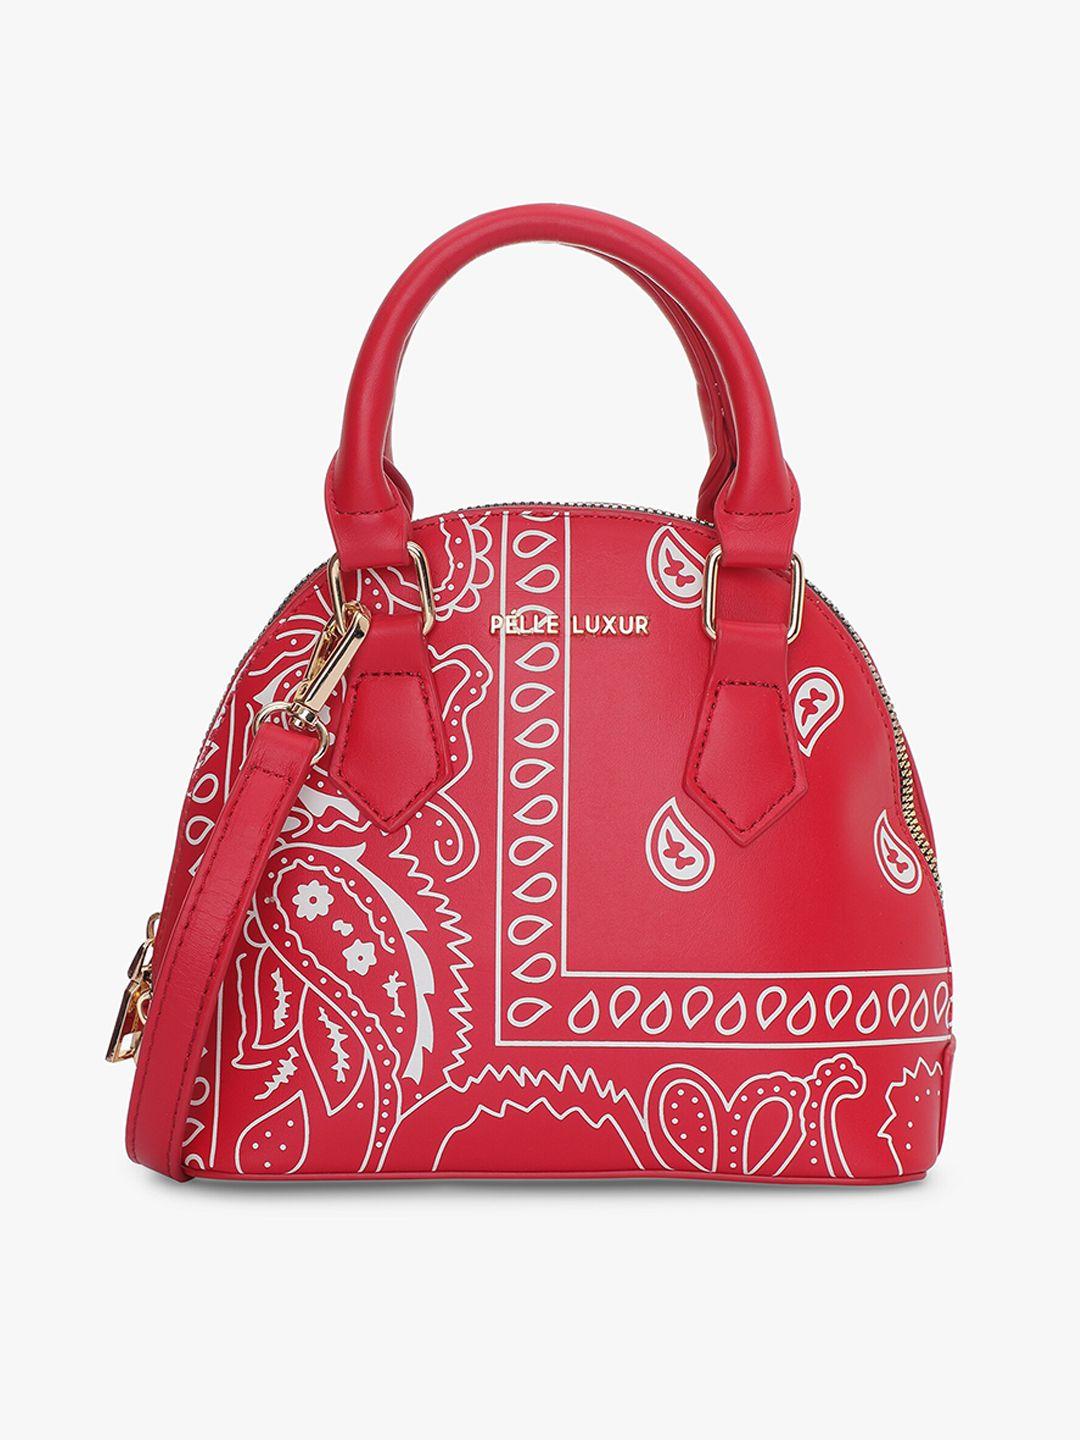 pelle luxur ethnic motifs printed structured handheld bag